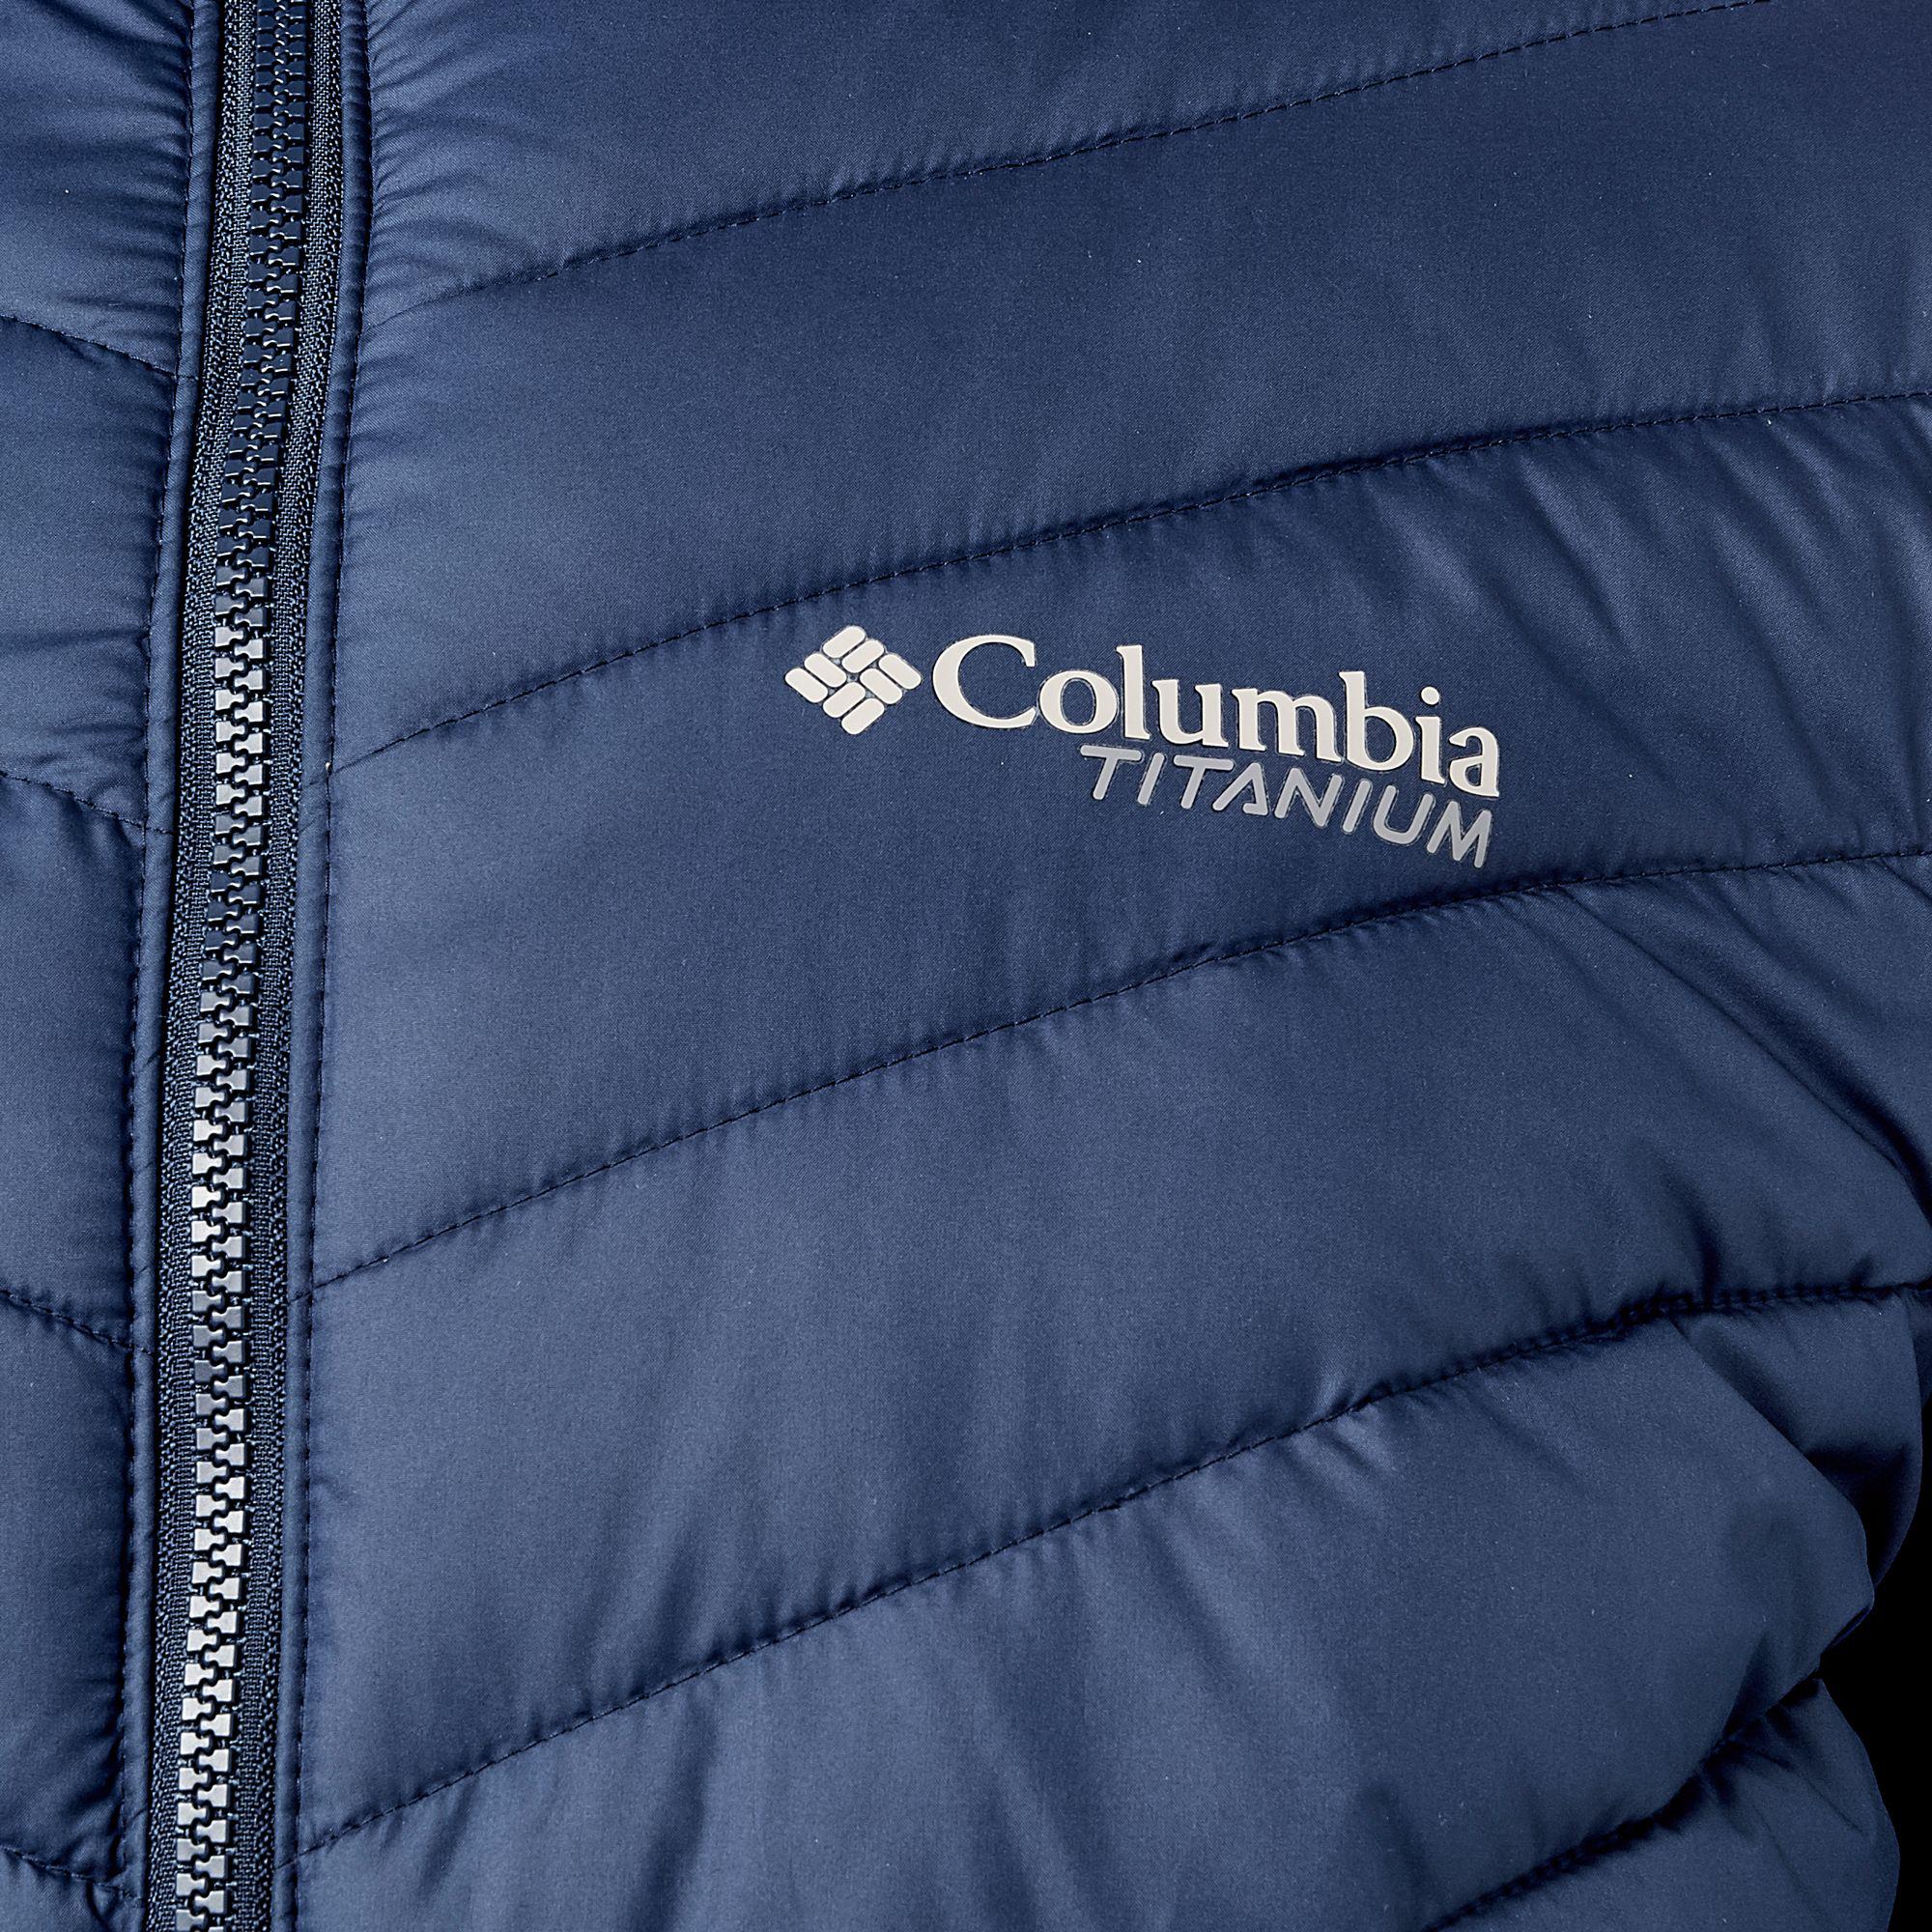 columbia valley ridge jacket